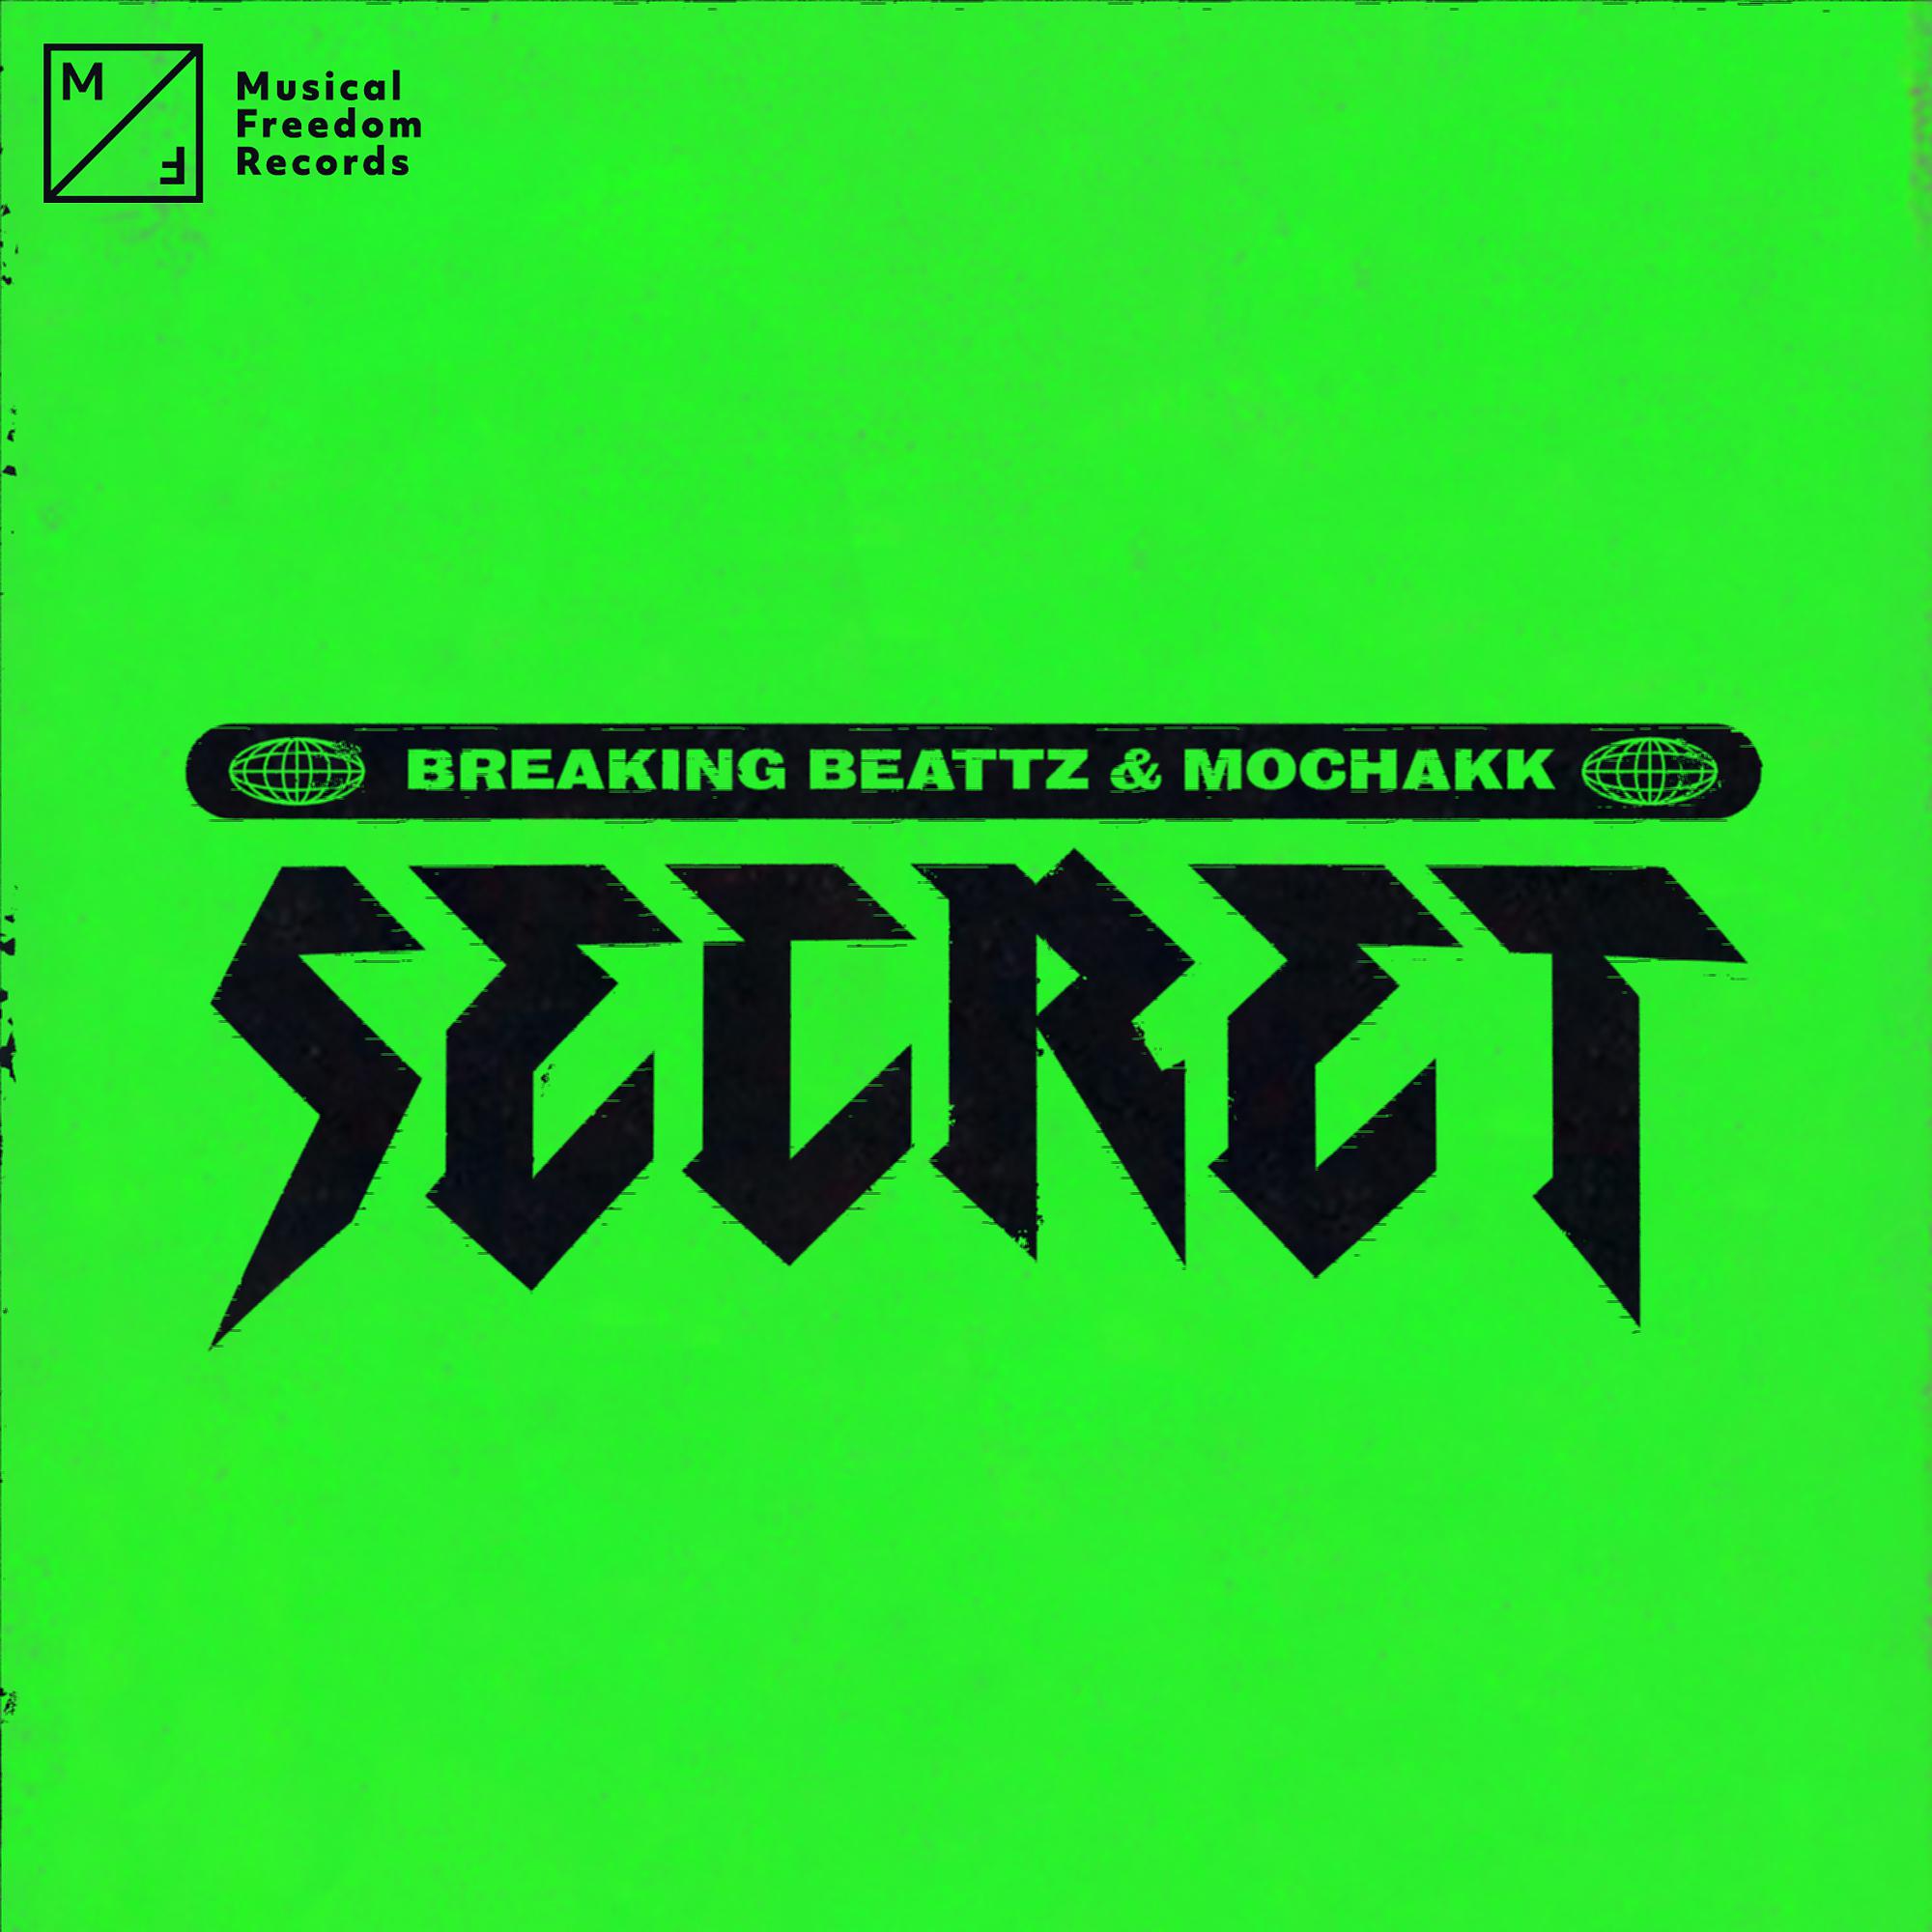 Secret broken. Mochakk. DJ Mochakk. SESCHI the Clown Mochakk. "Breaking Beattz" && ( исполнитель | группа | музыка | Music | Band | artist ) && (фото | photo).